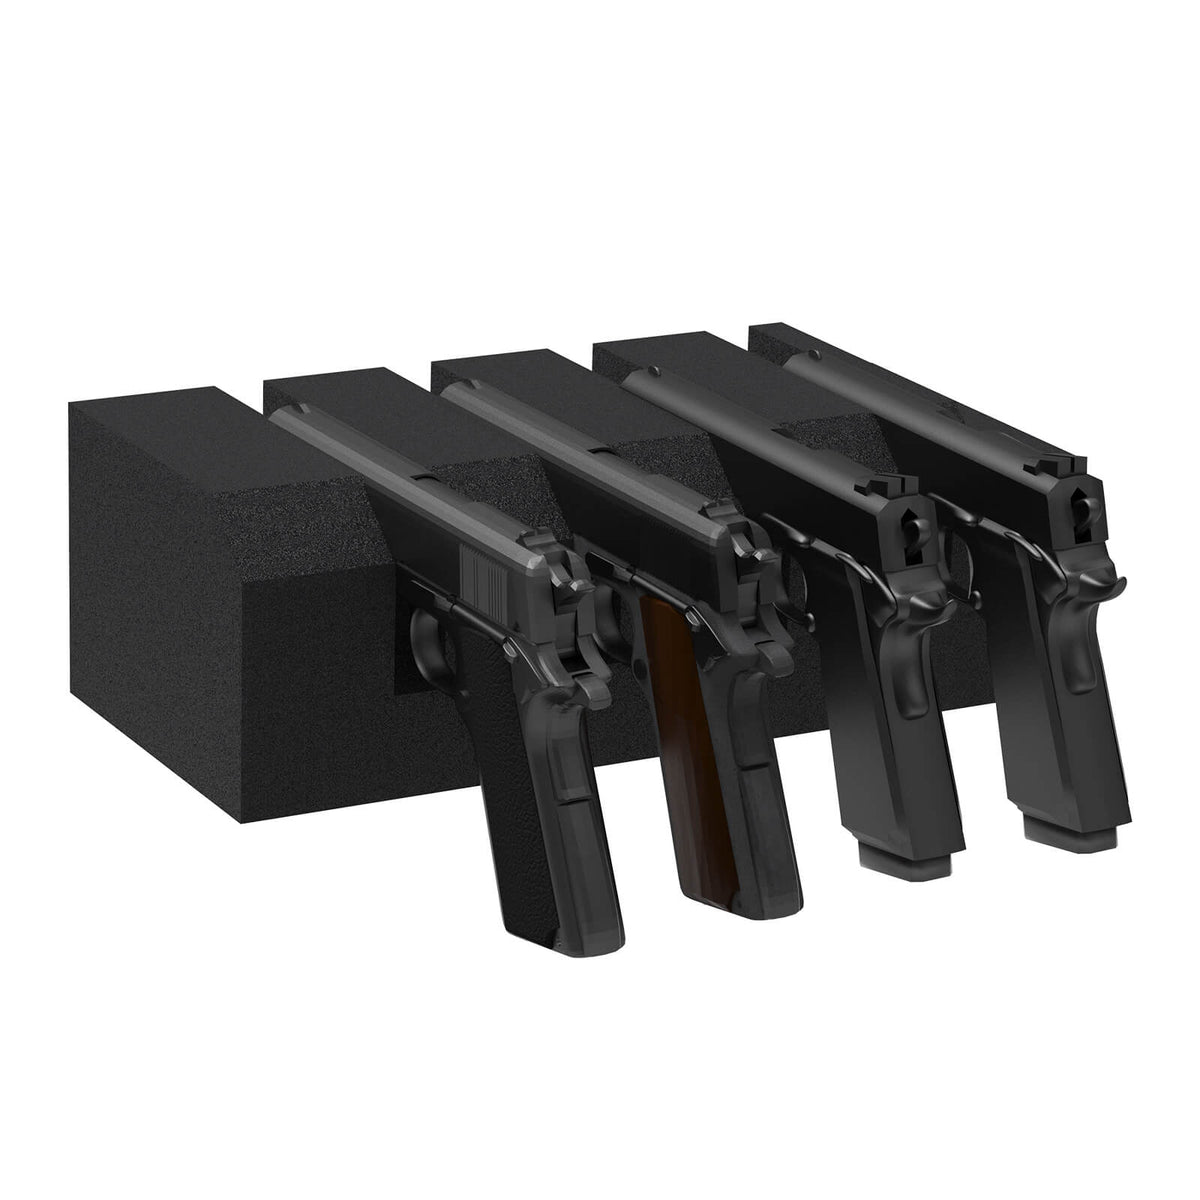 RPNB RP2004 Multi Pistol Safe | 4 Gun Capacity | Biometric Lock | Quick Access